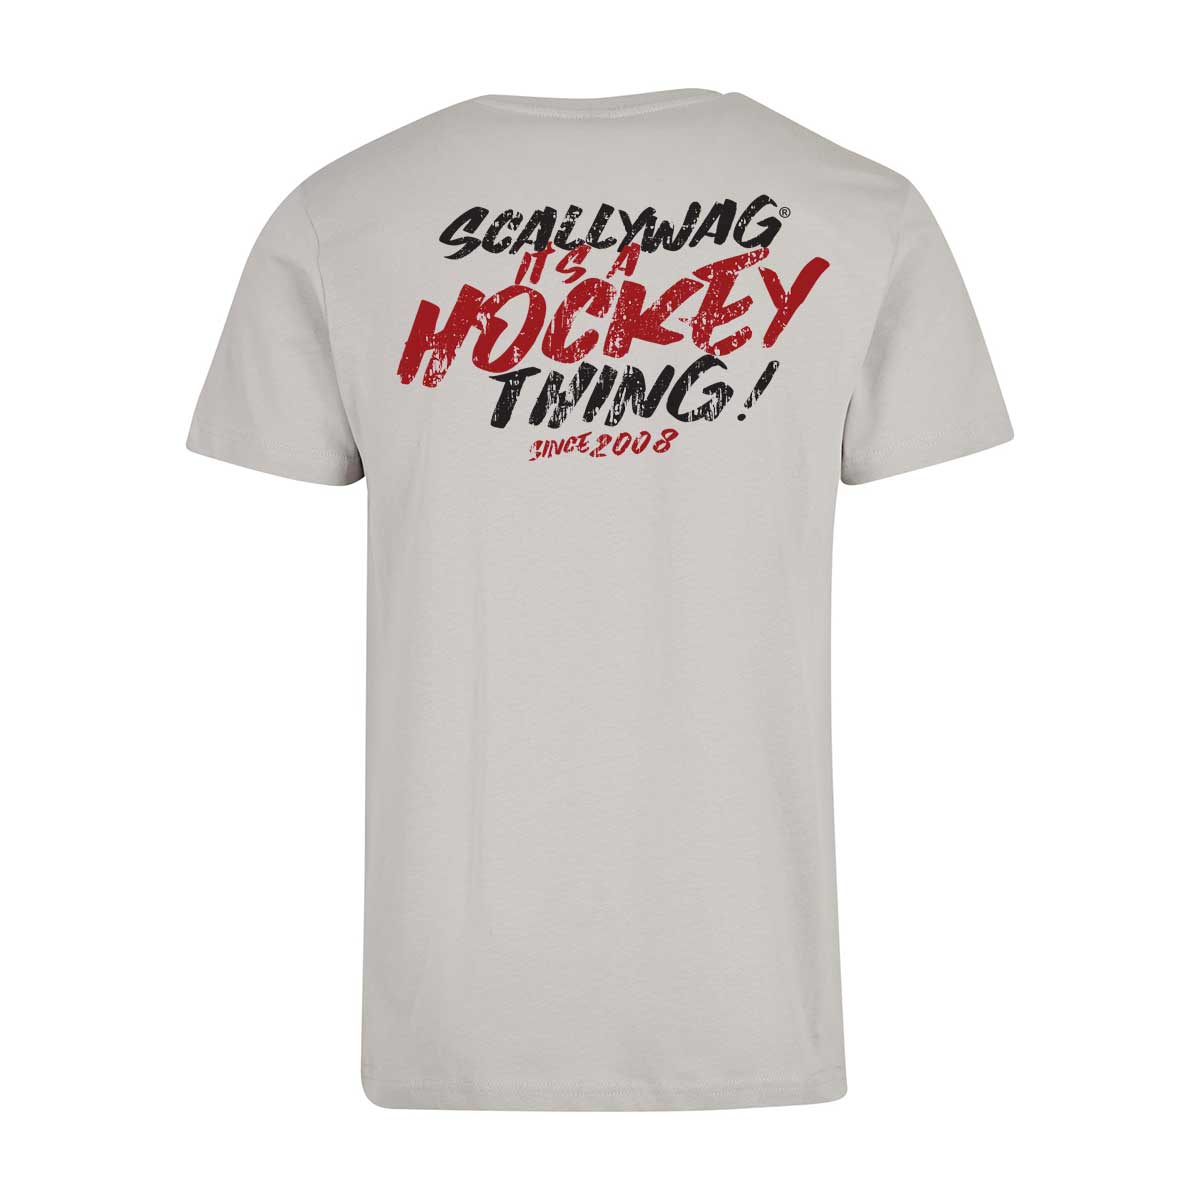 SCALLYWAG® T-Shirt IT'S A HOCKEY THING! - COR3zilla